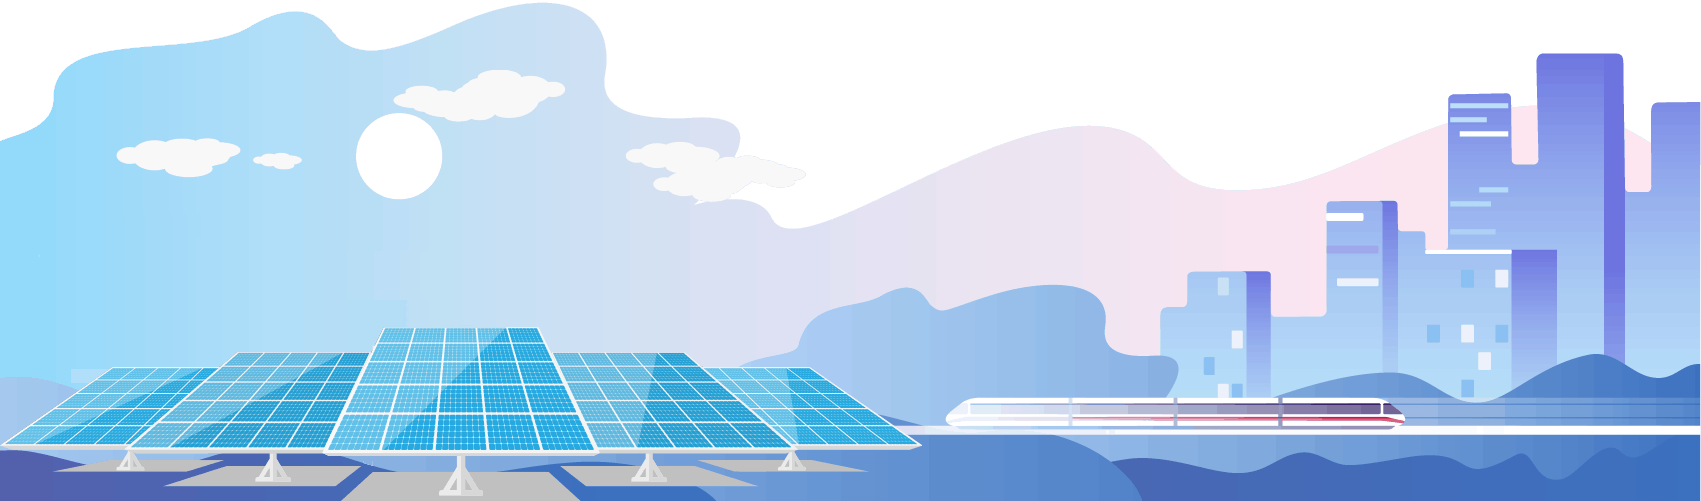 modern illustrated city solar panels